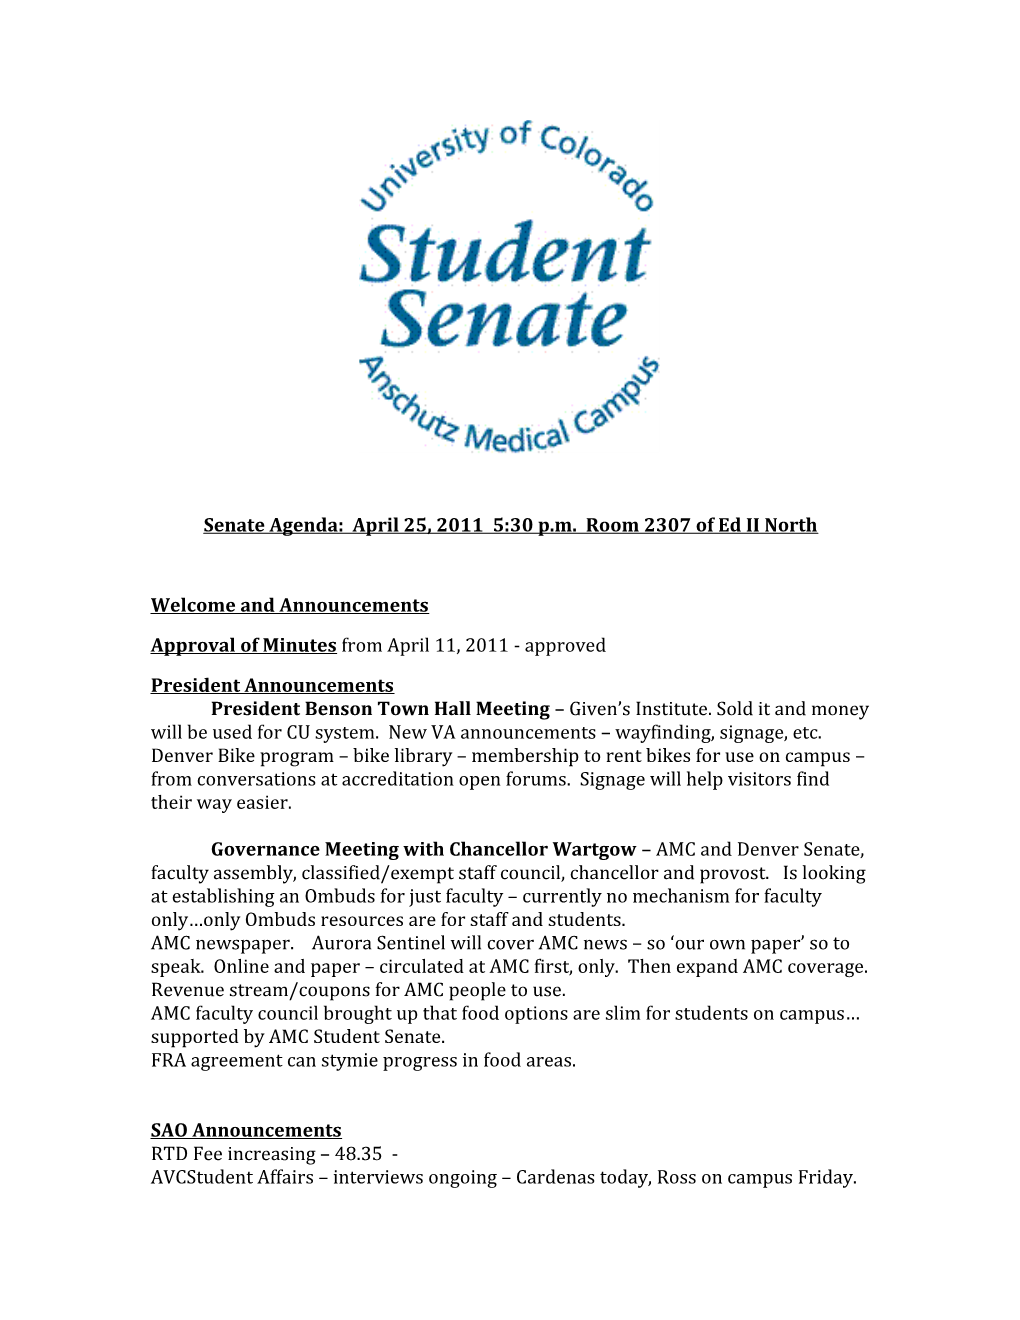 Senate Agenda: April 25, 2011 5:30 P.M. Room 2307 of Ed II North